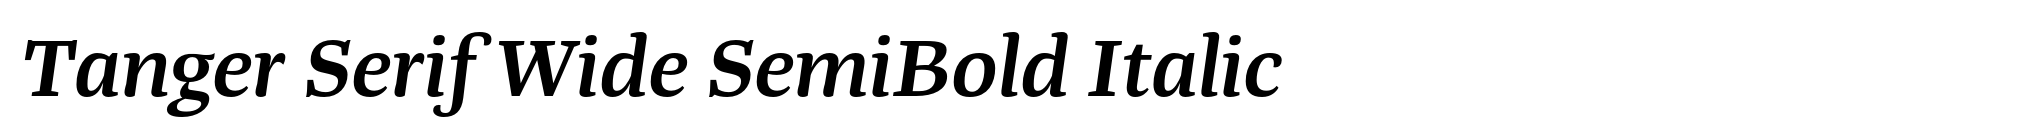 Tanger Serif Wide SemiBold Italic image